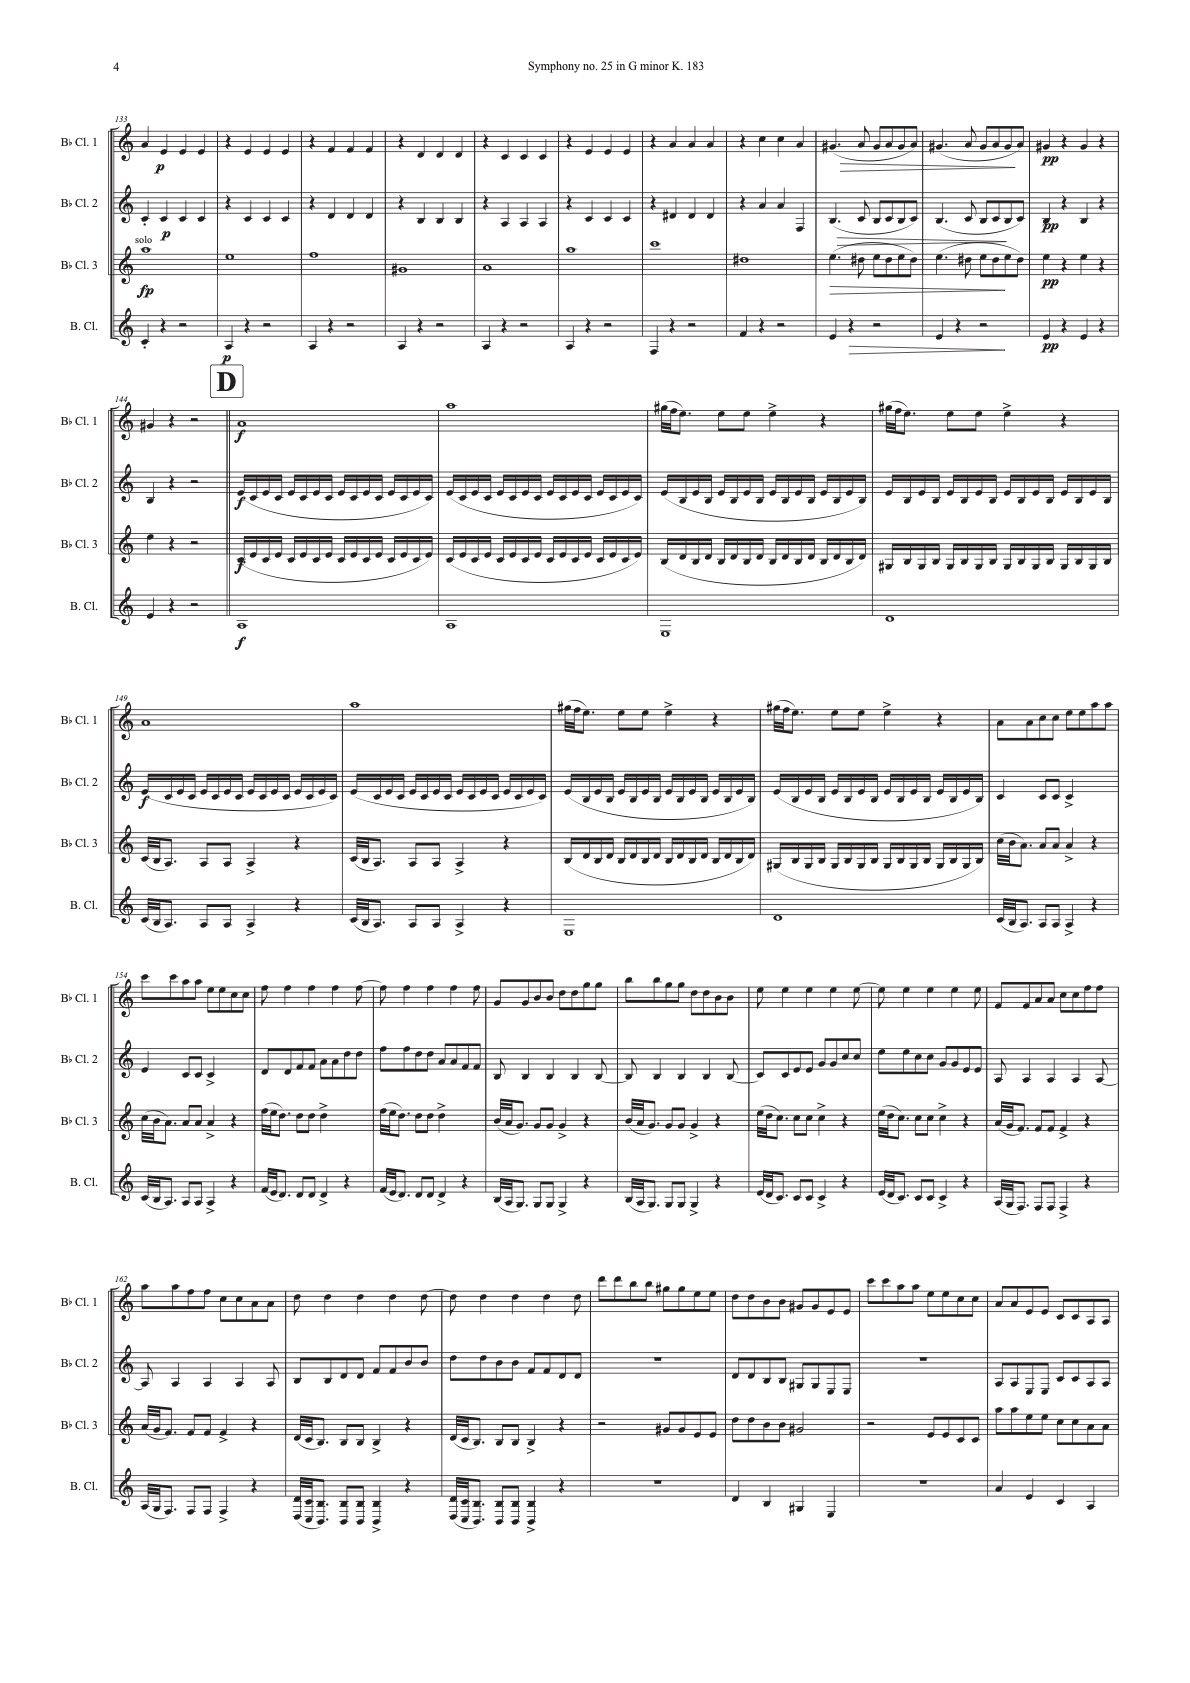 Clarinet Quartet sheet music: Mozart's Symphony no. 25 in G minor - ChaipruckMekara